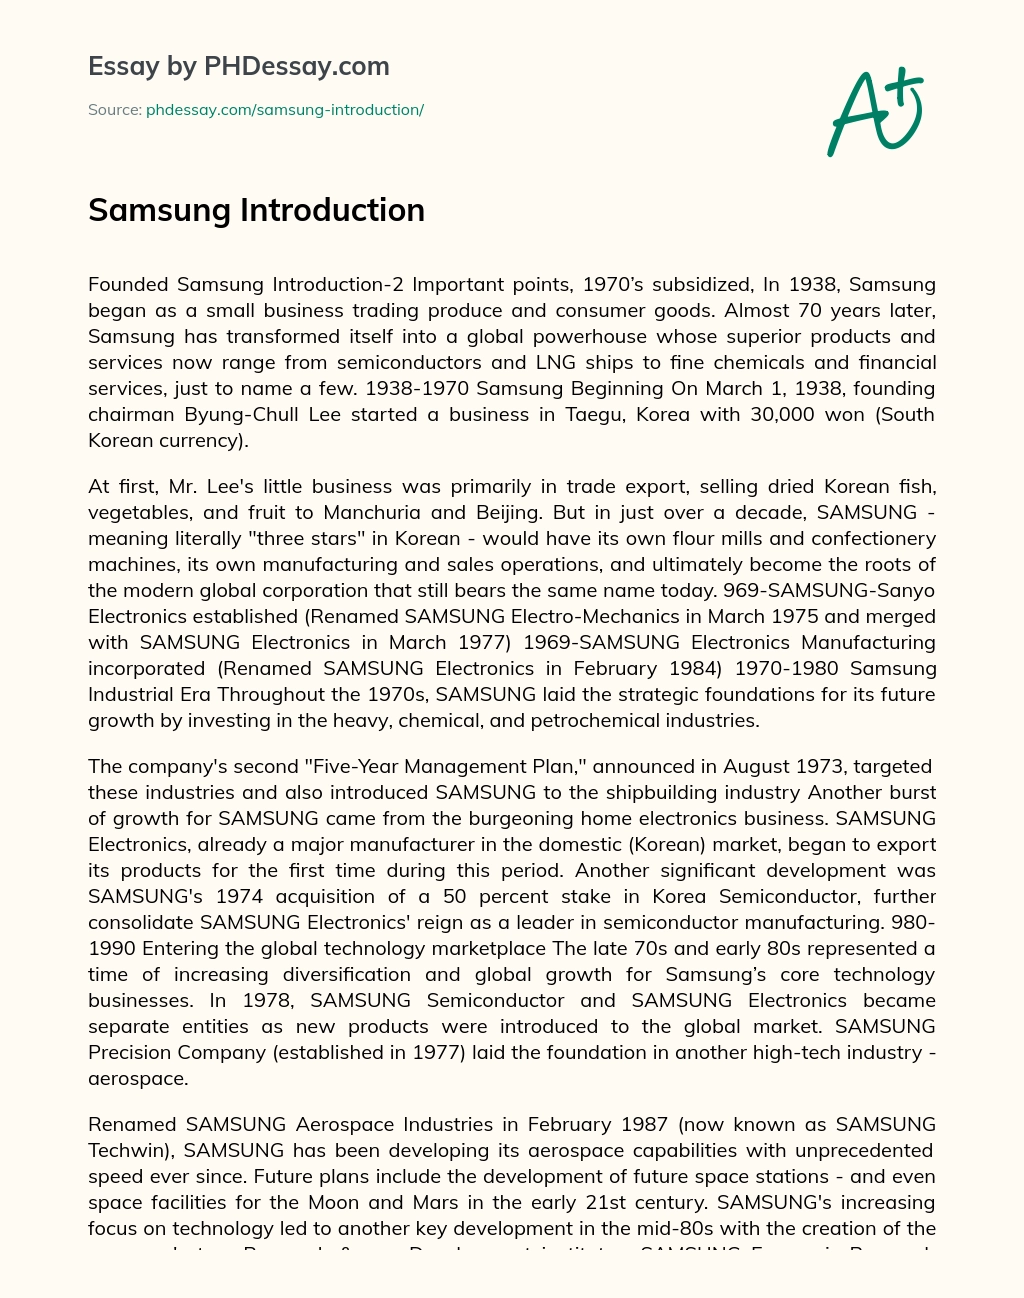 Samsung Introduction essay